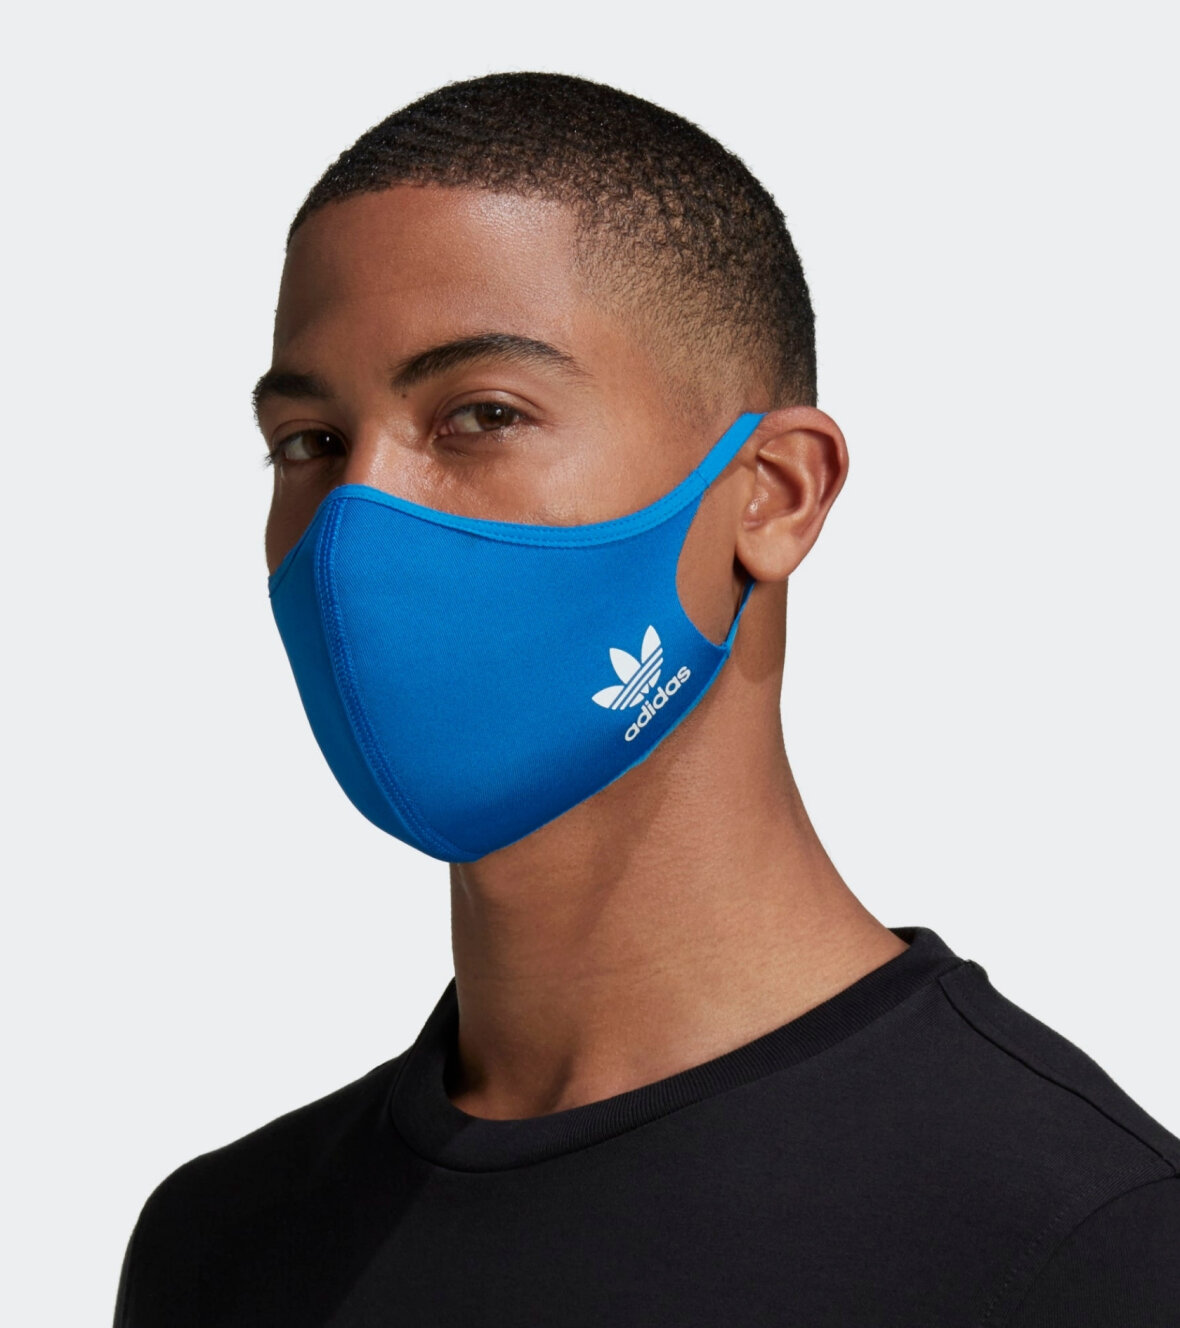 dr. Adams - Accessories - Adidas - Face CVR x3 Blue